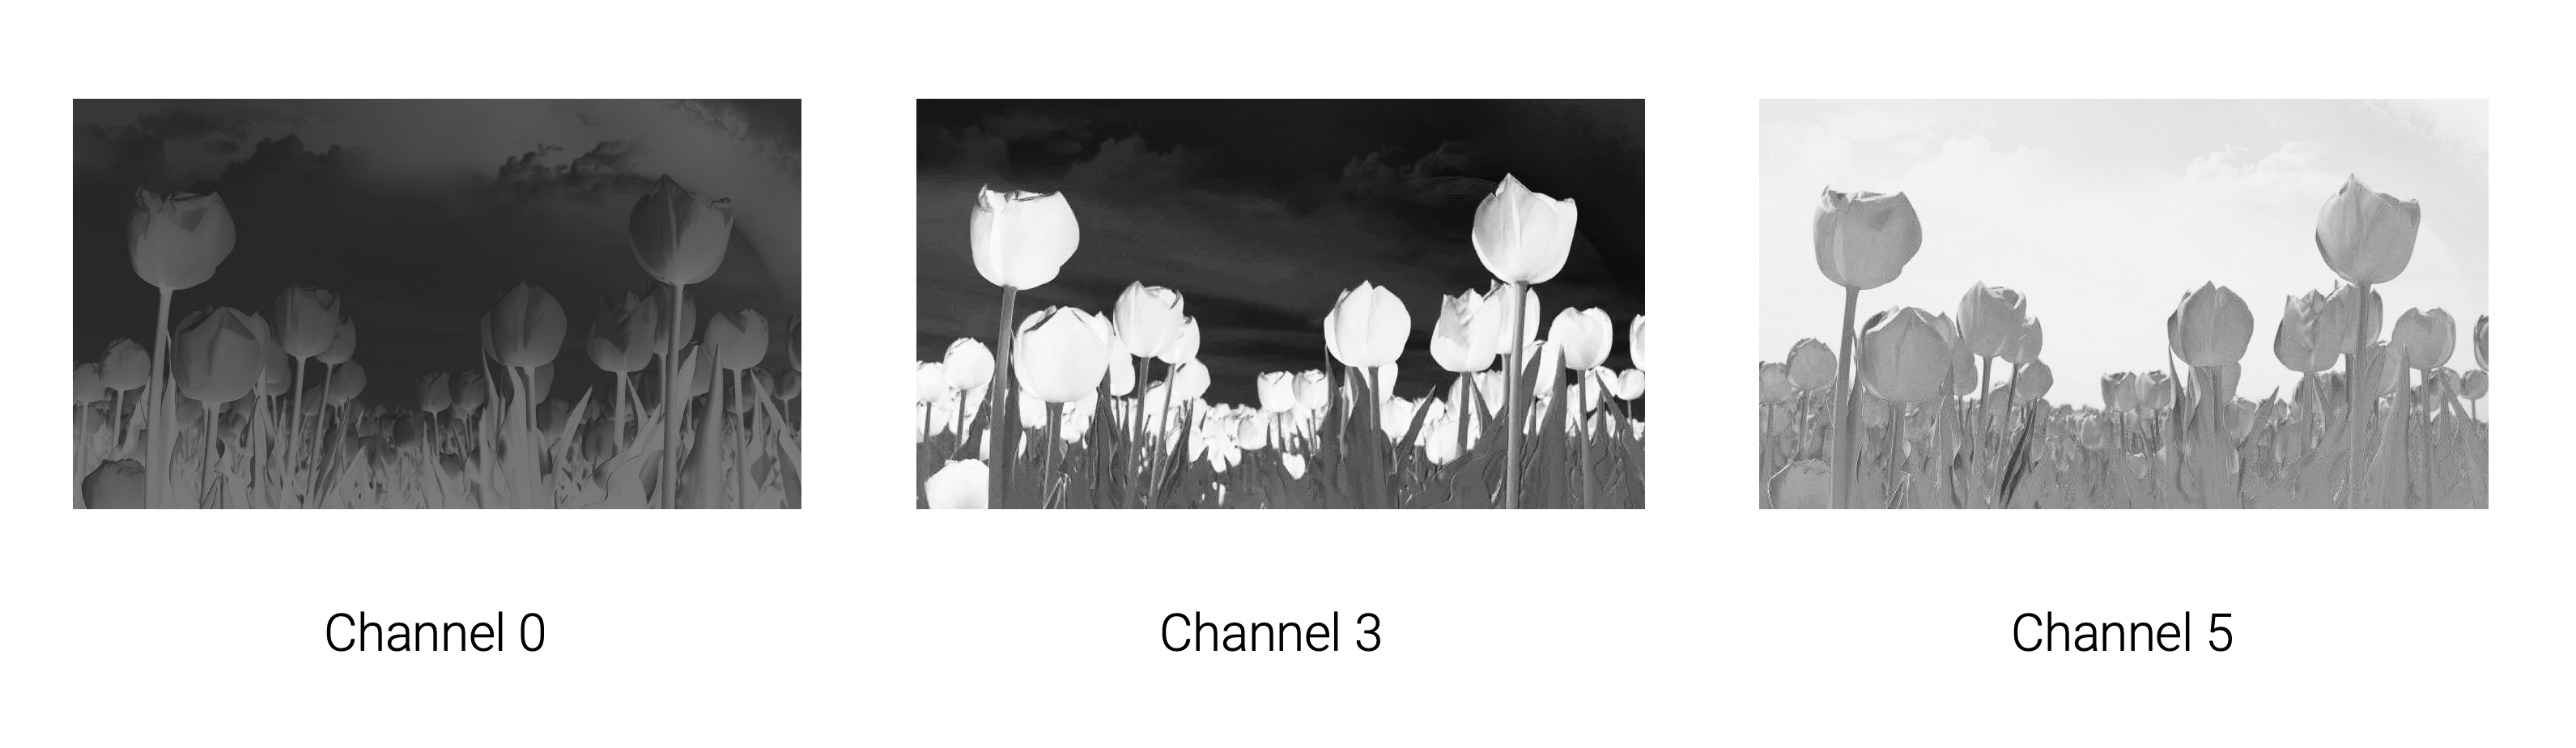 Intermediate representation channels 0, 3, 5